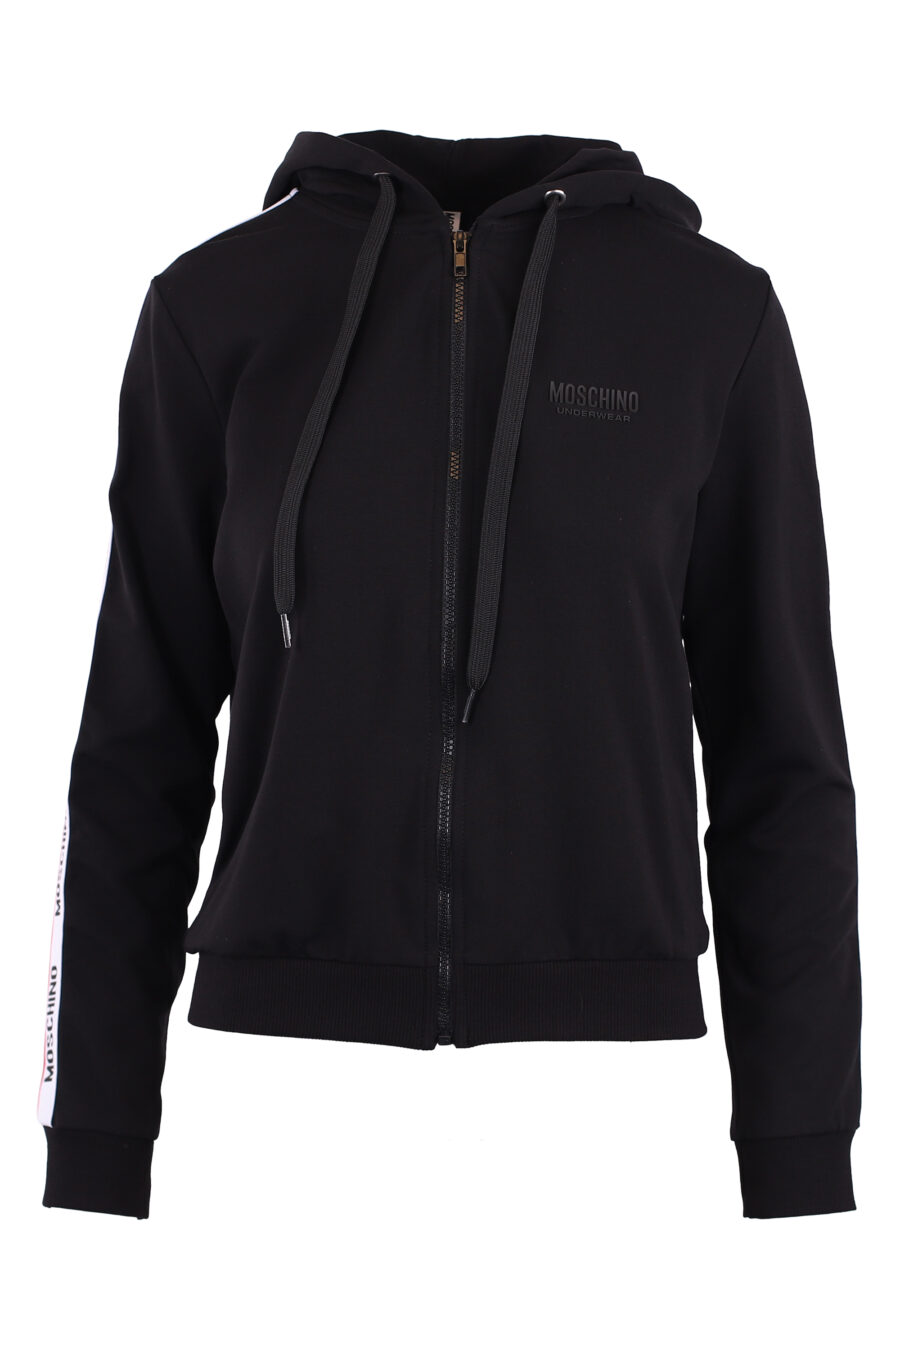 Black hooded sweatshirt with monochrome logo - IMG 6214